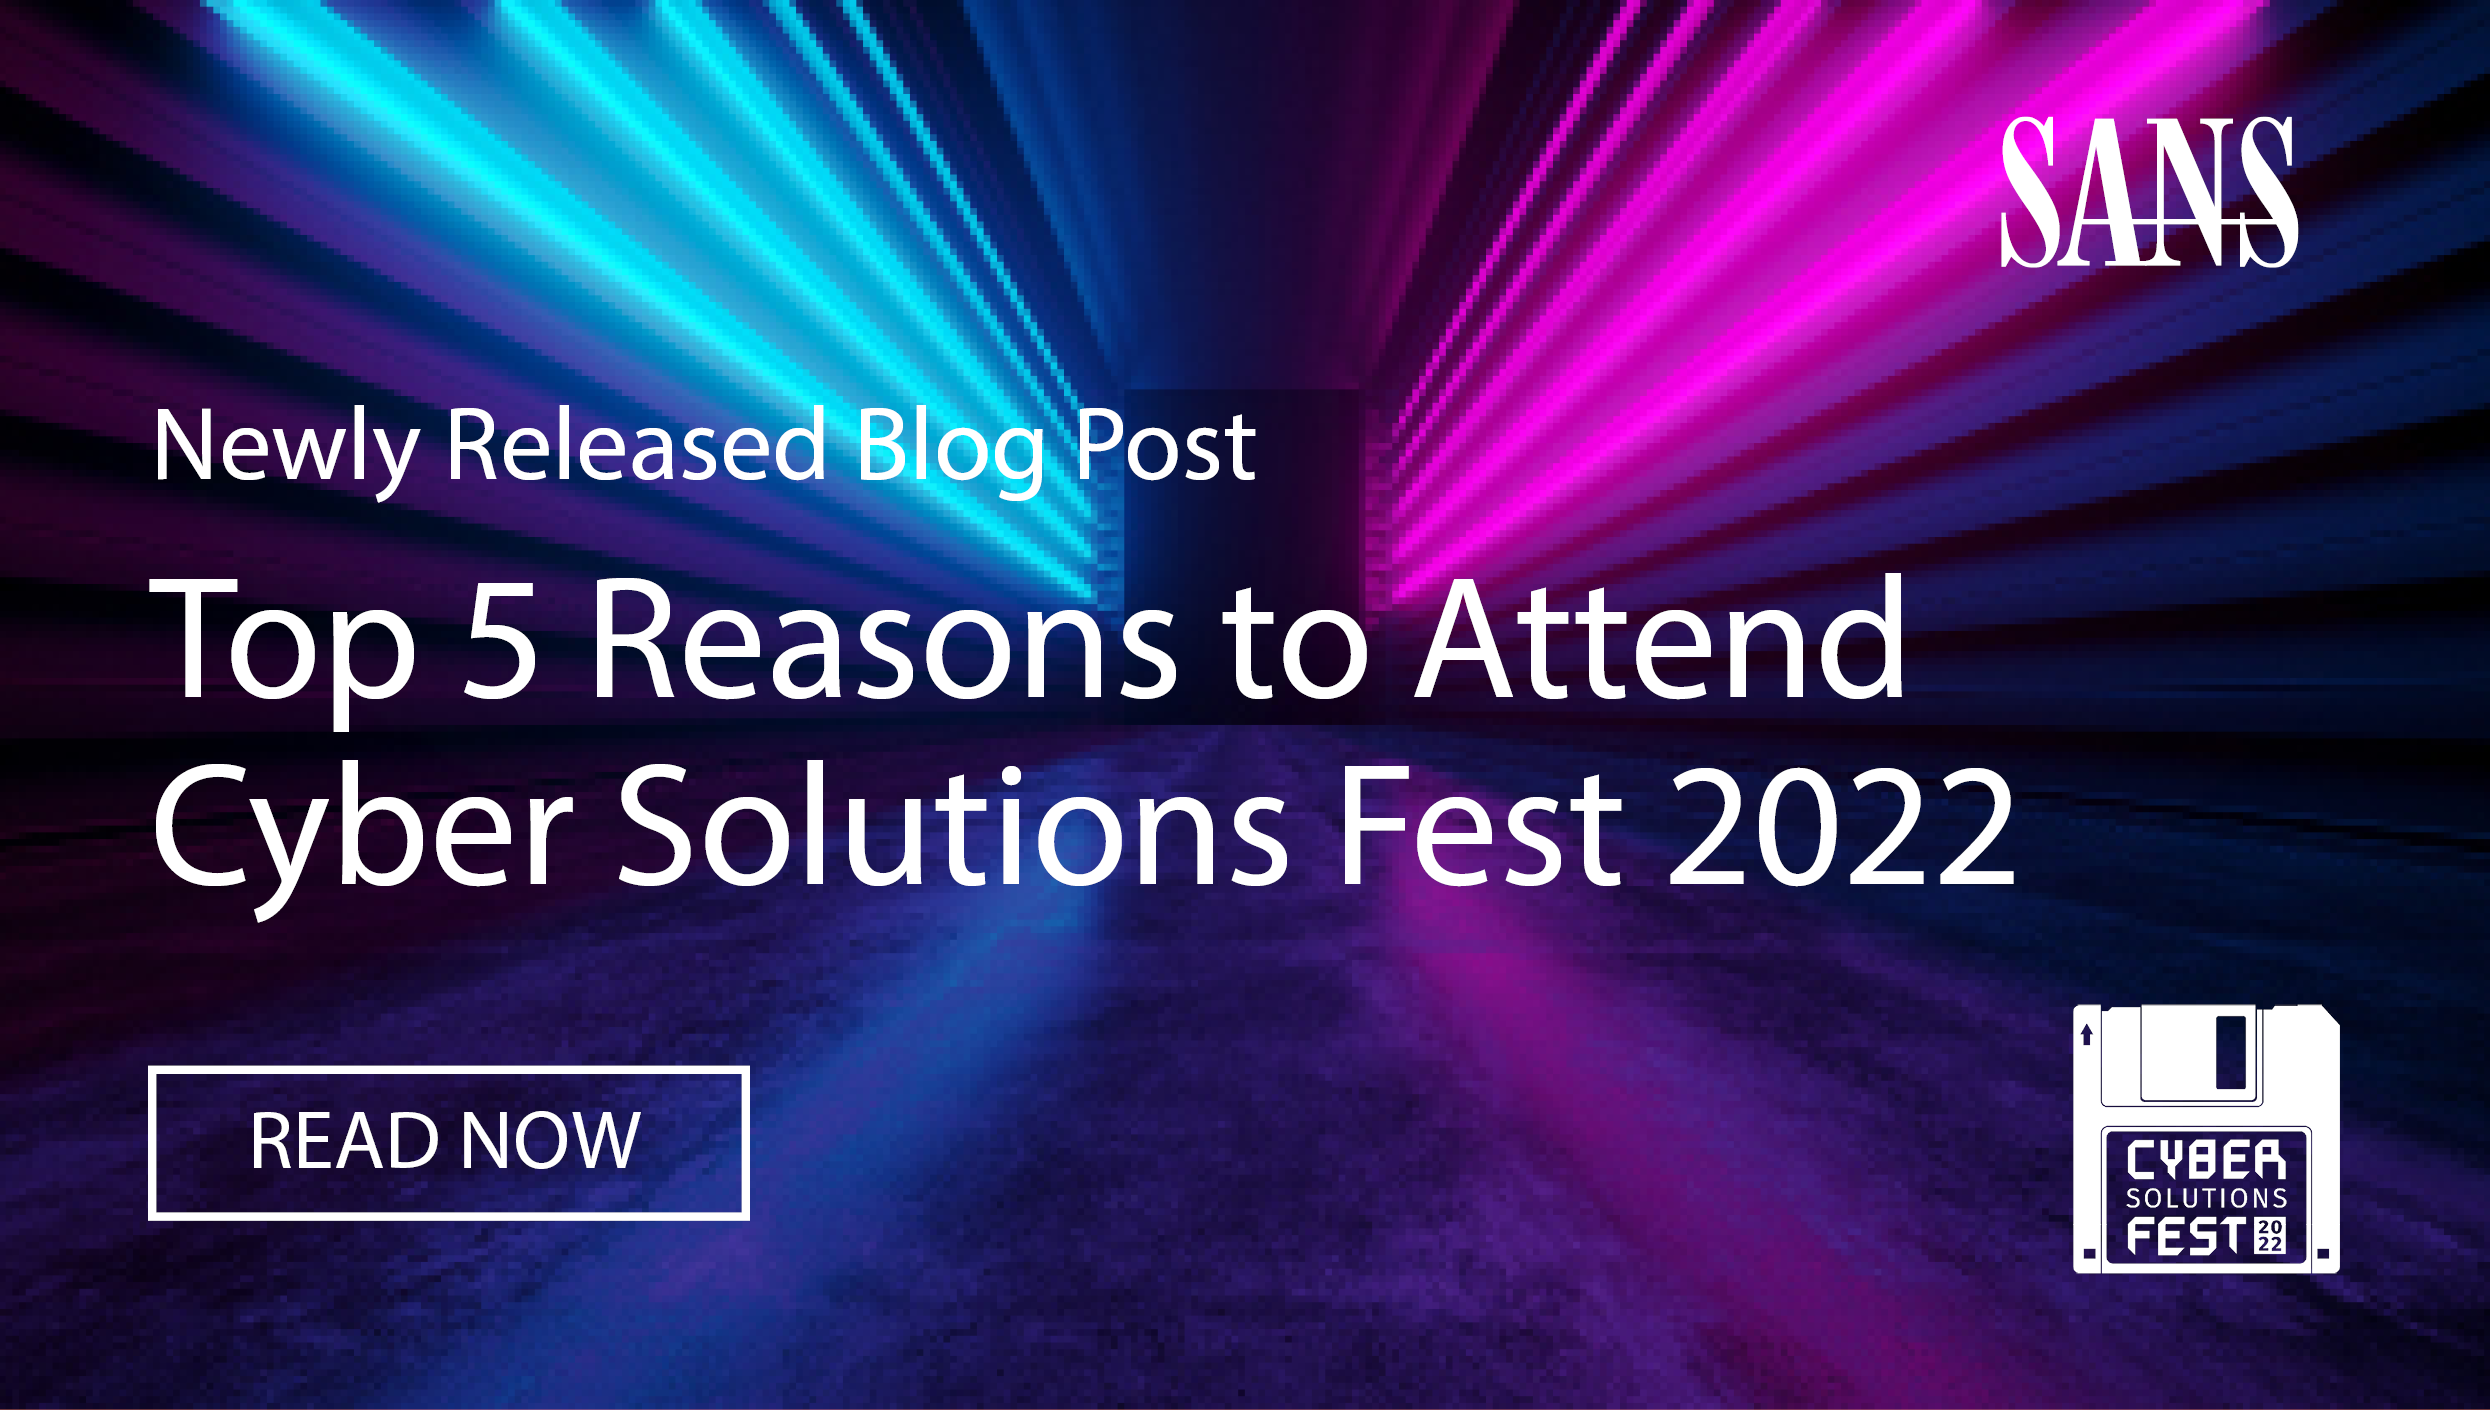 Cyber Solutions Fest 2022 Blog Post